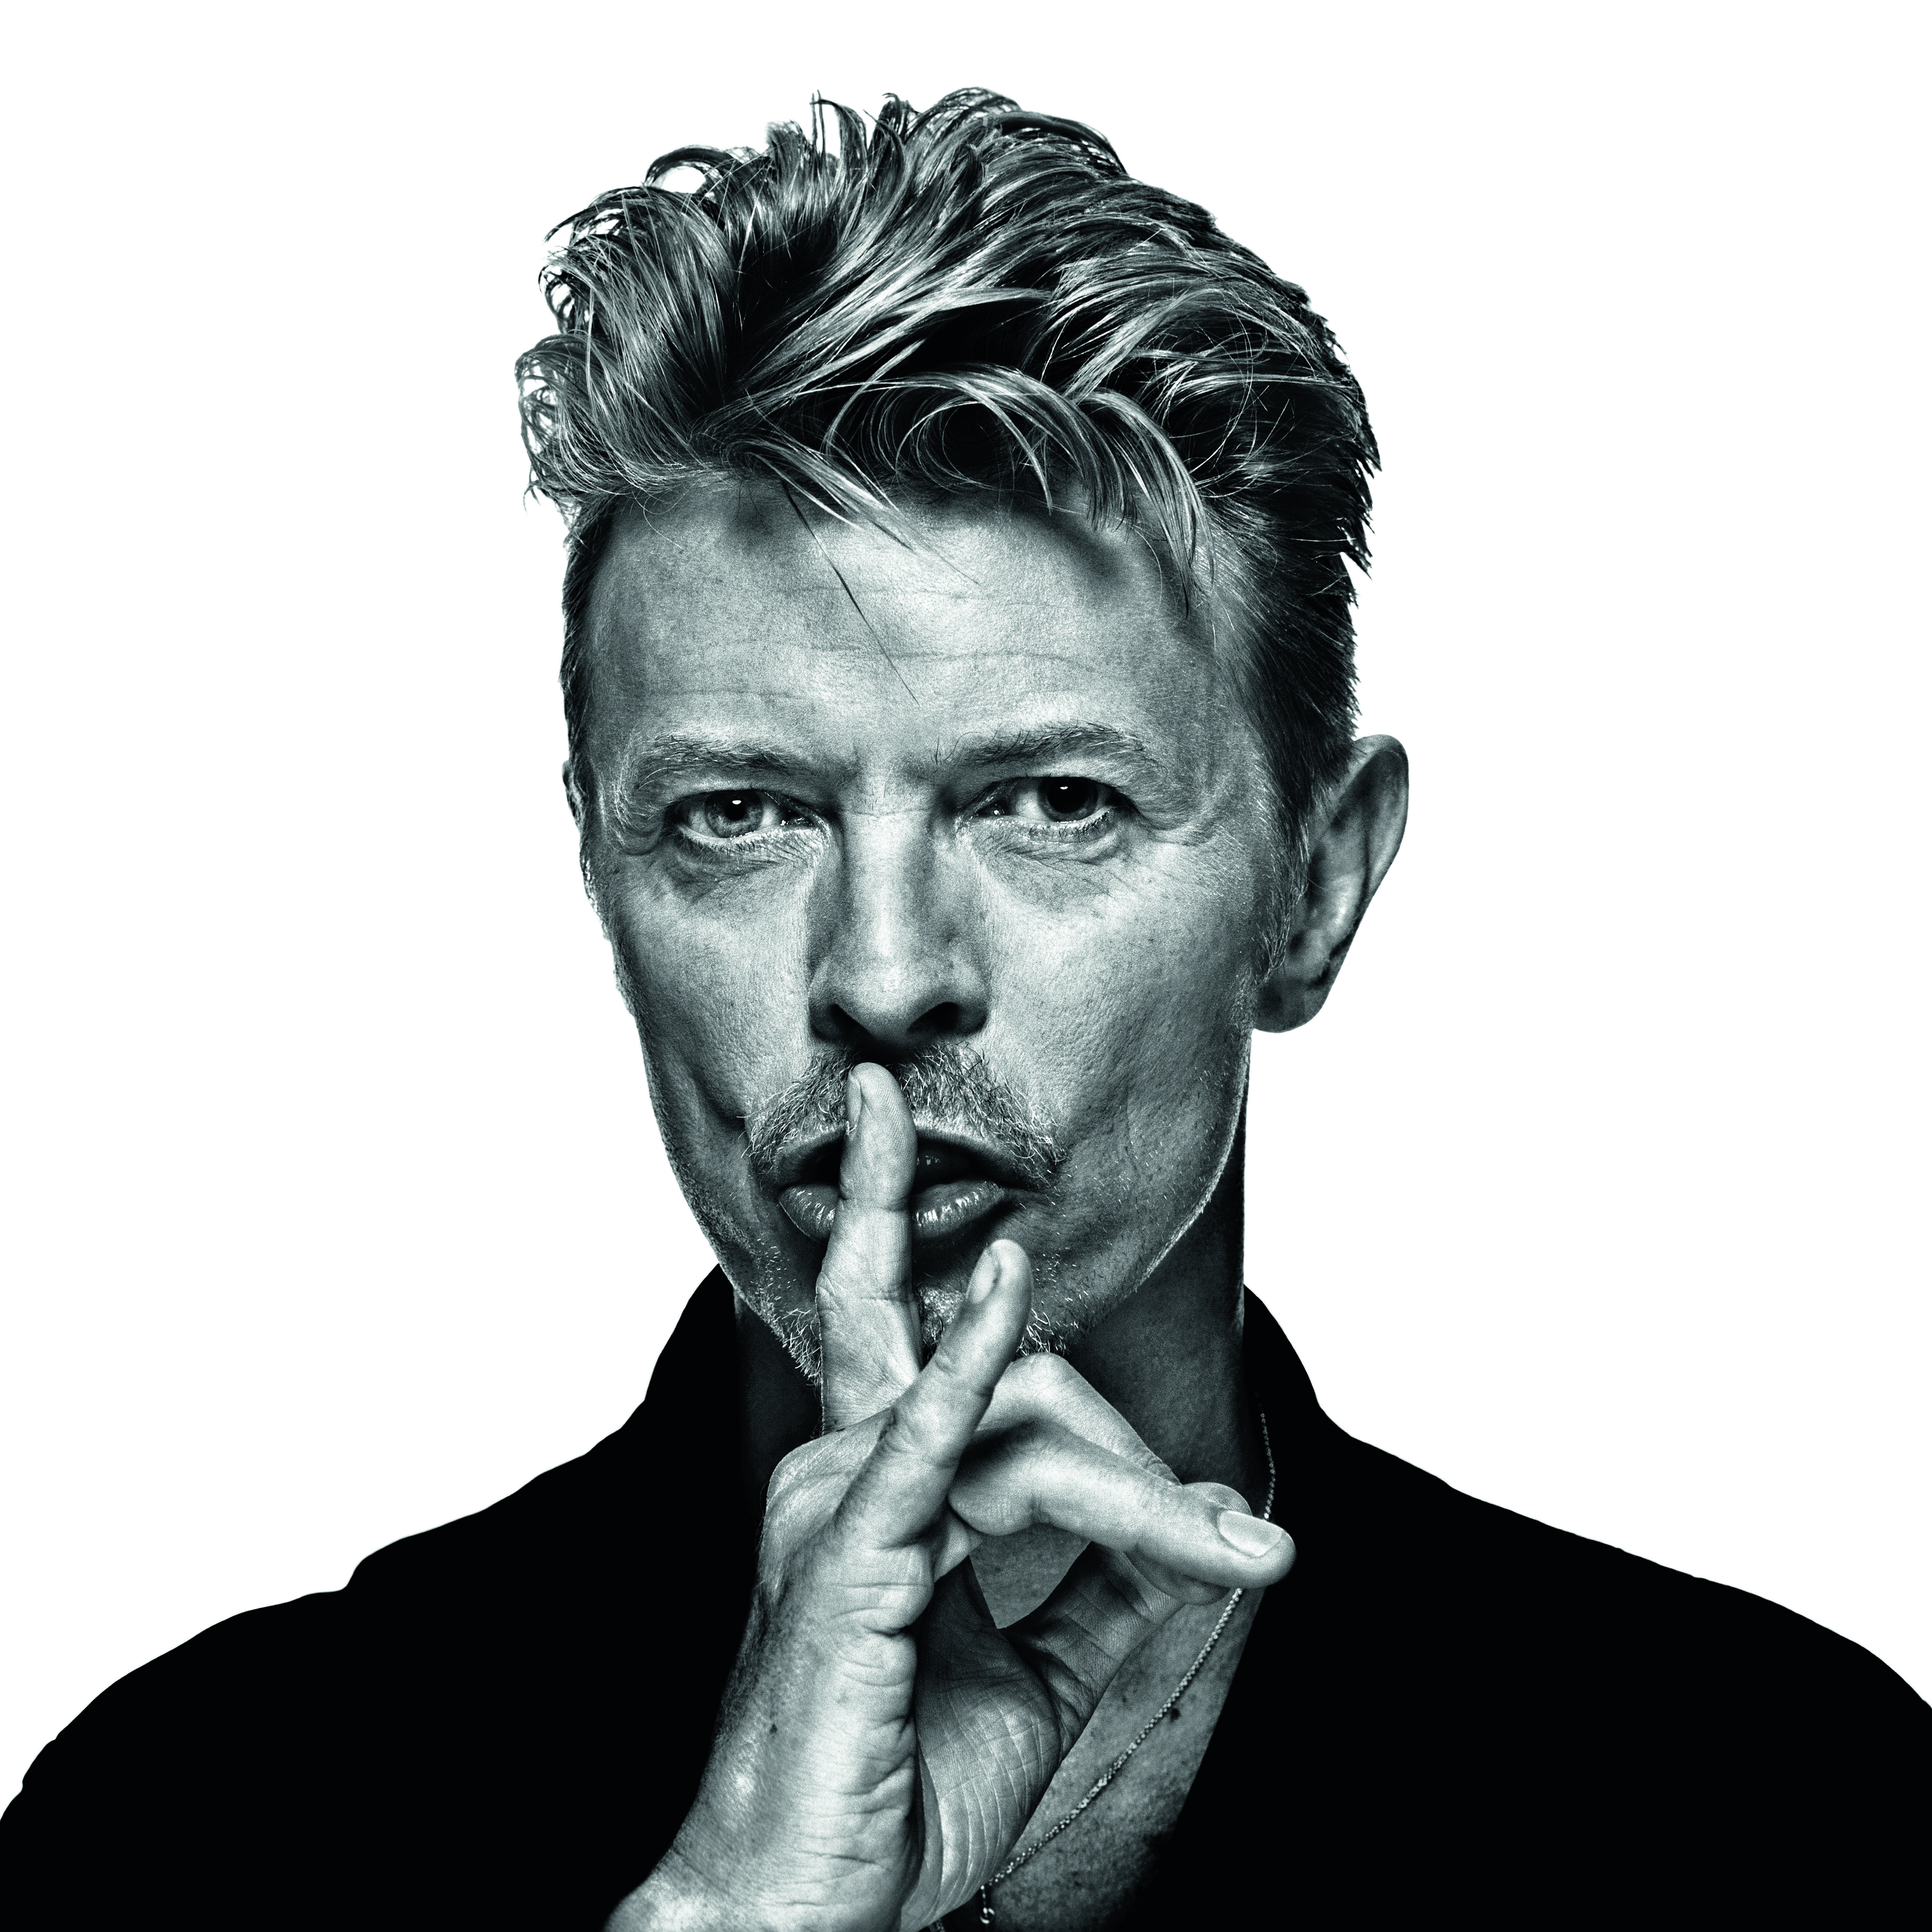 David Bowie, by Gavin Evans